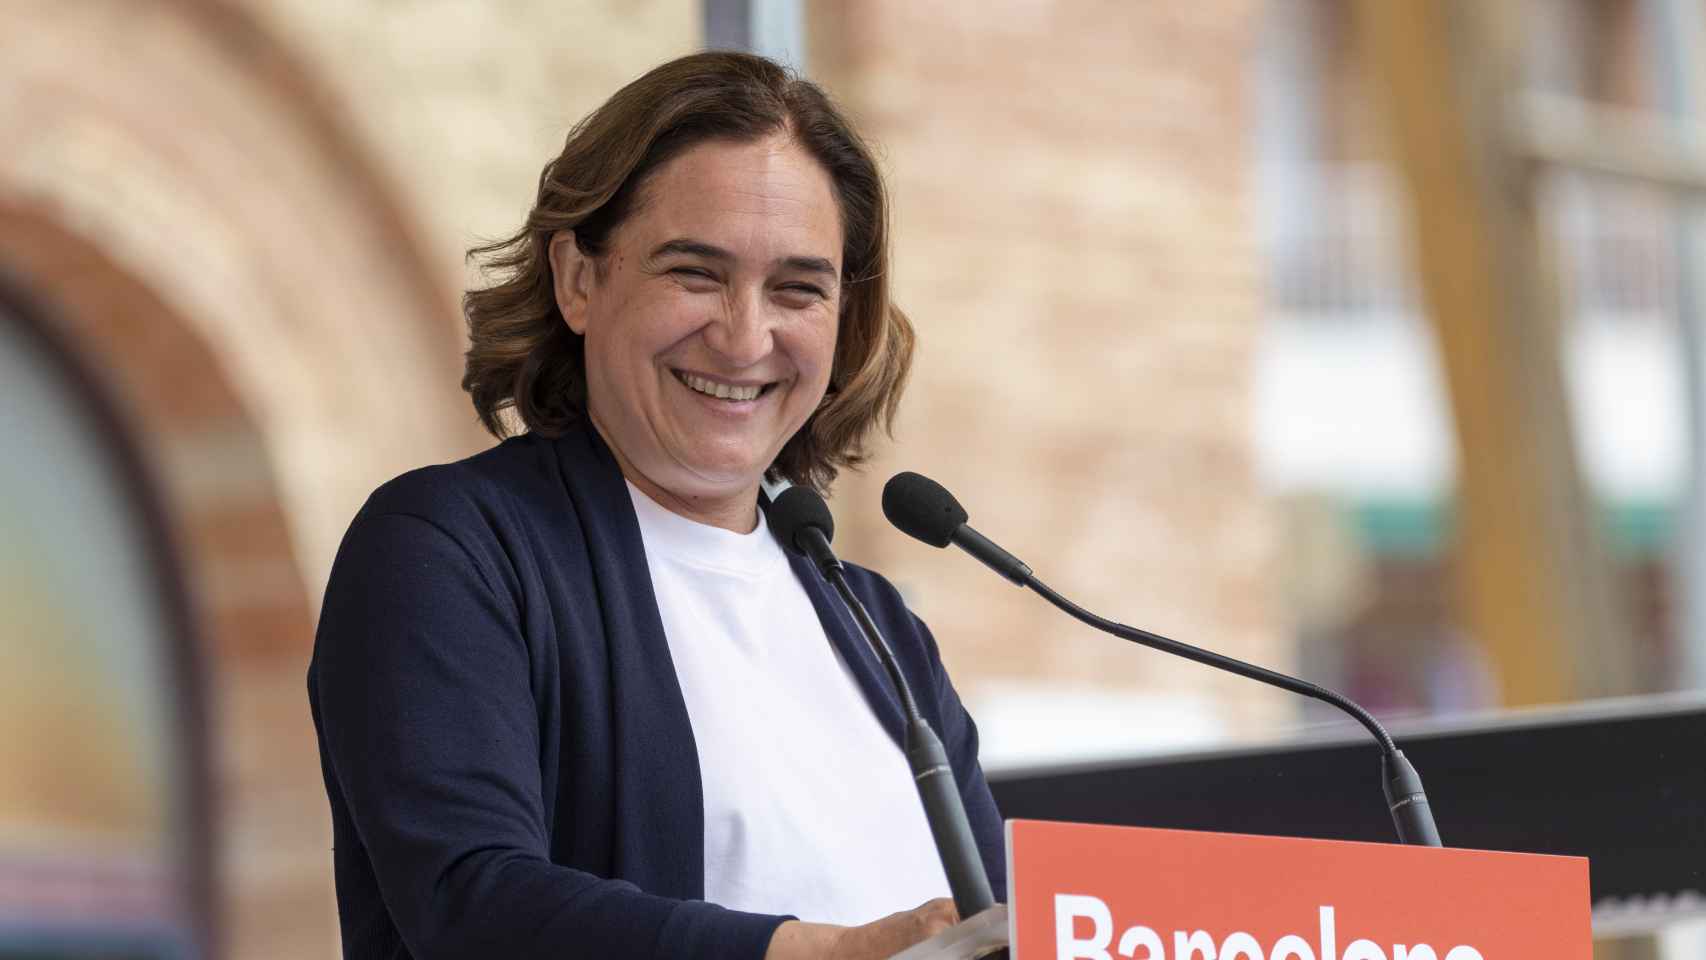 A qué se dedicaba Ada Colau antes de ser alcaldesa de Barcelona